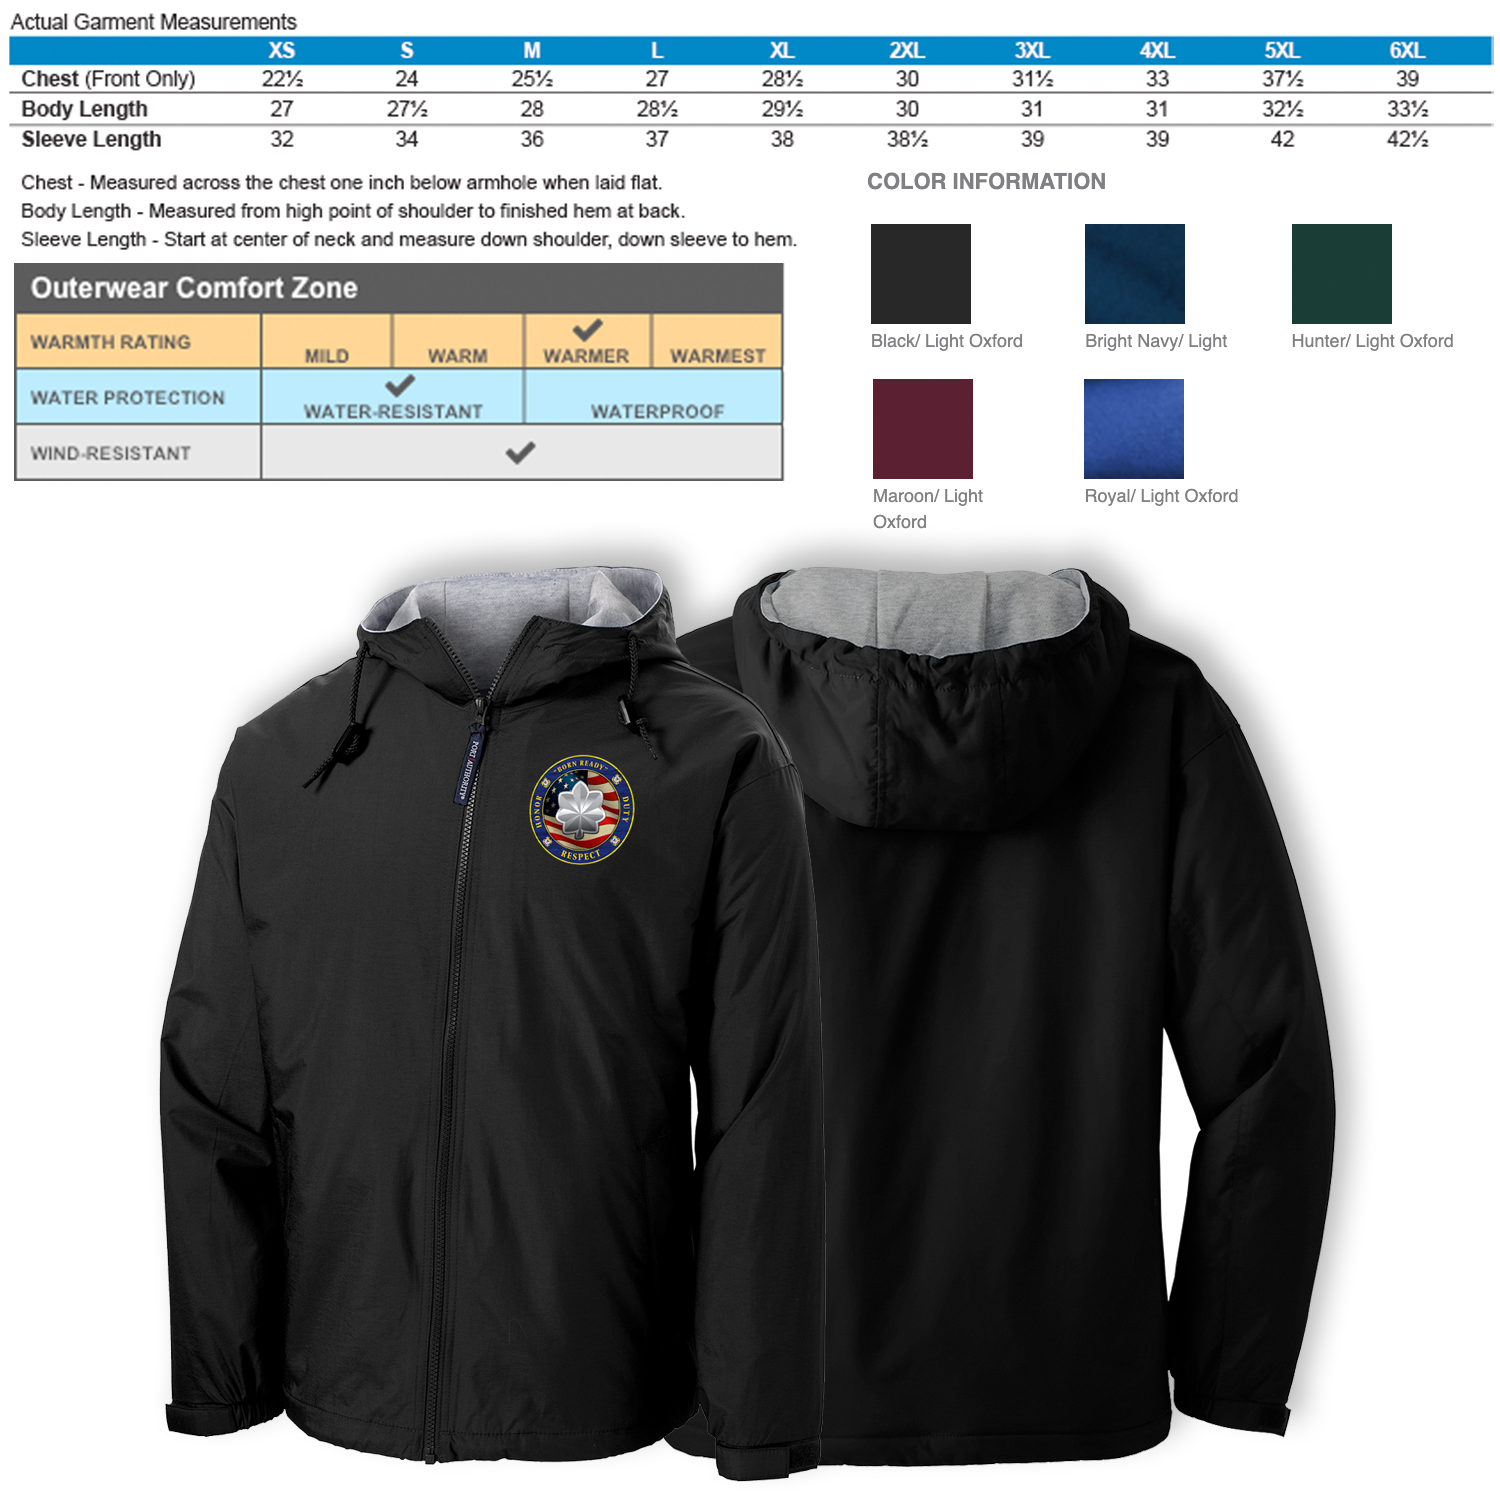 Custom US Coast Guard Ranks/Insignia Military Mottos, Core Values Print On Left Chest Team Jacket